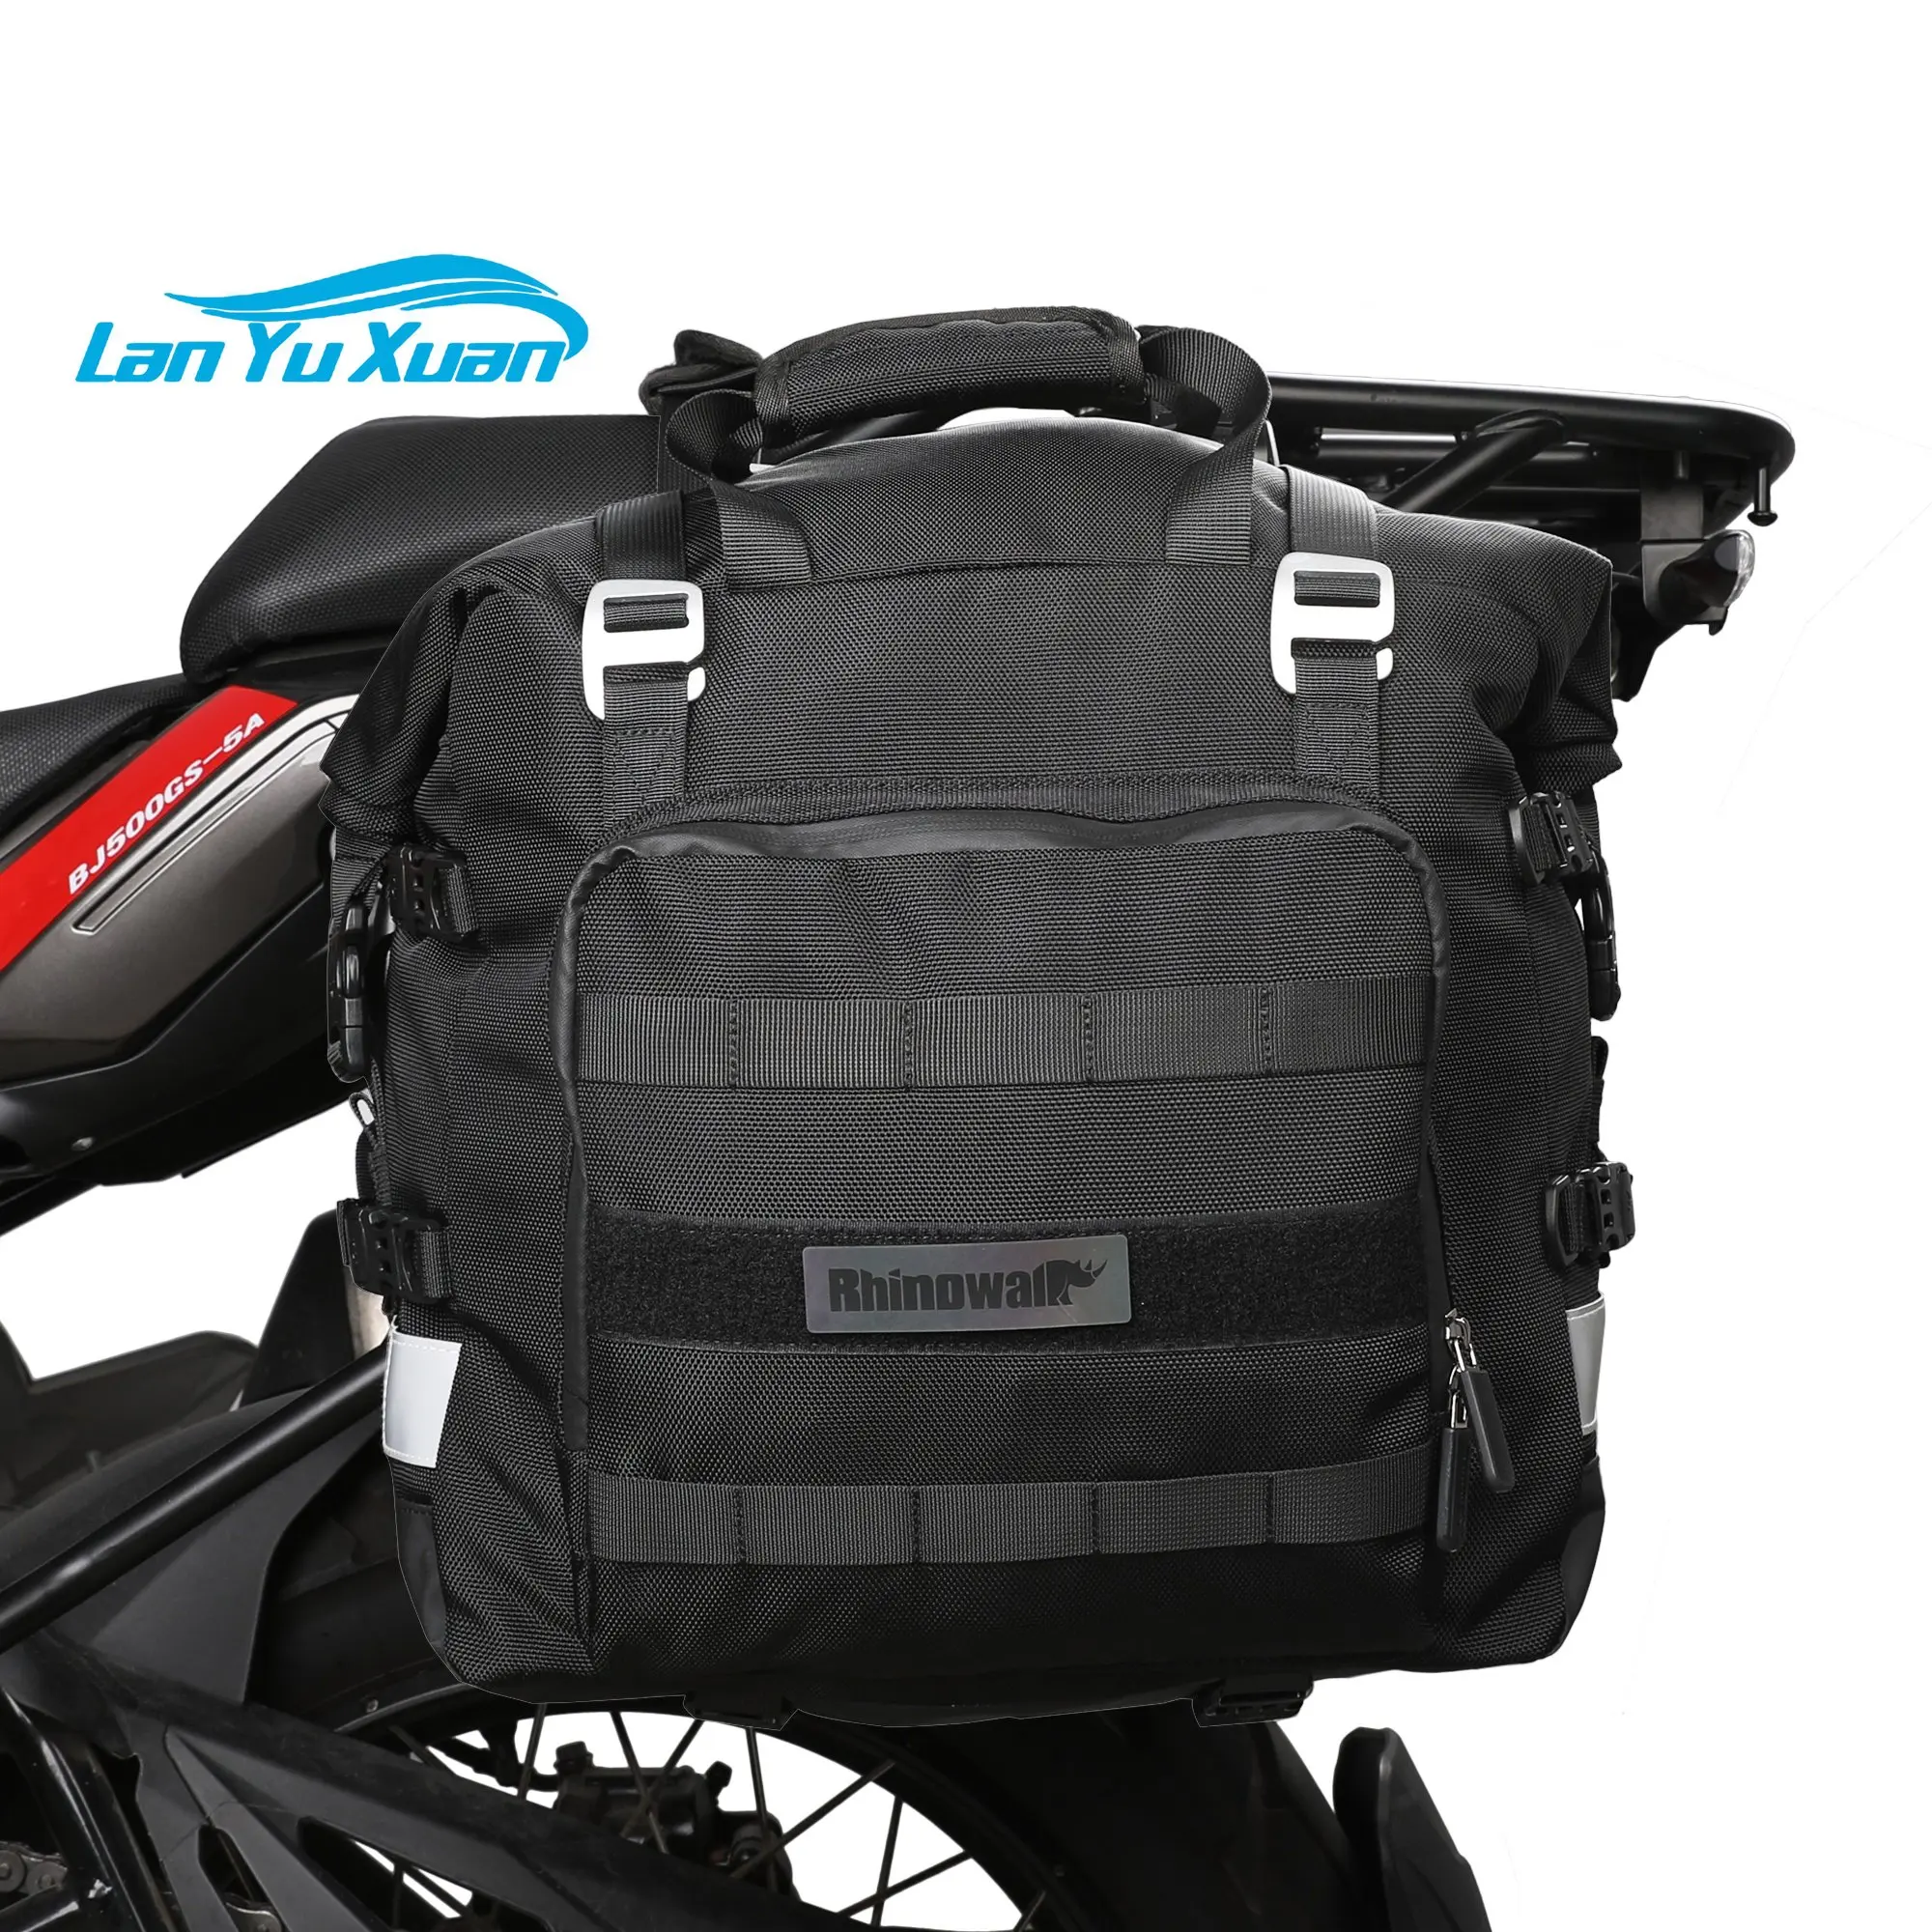 Rhinowalk Motorcycle 20L Side Bag Water Resistant Motorbike Pannier Luggage for Motorcycle Tail Seat Saddle Bag